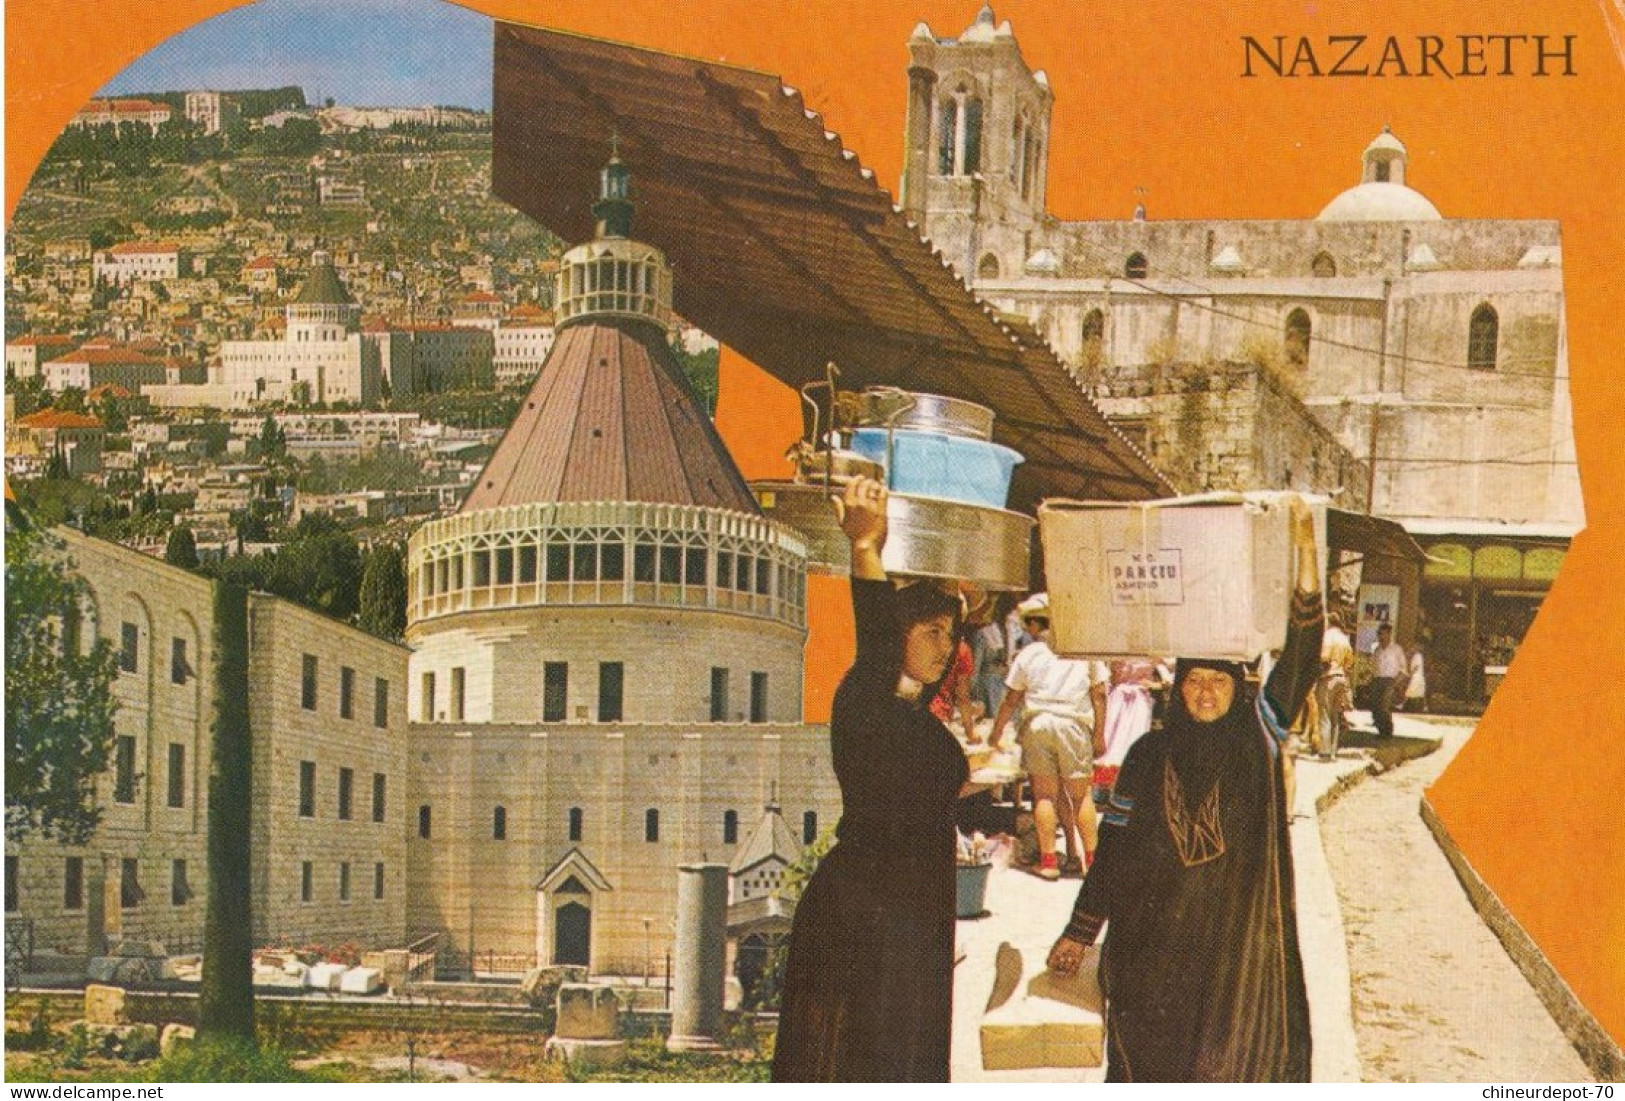 Nazareth Israel - Israel